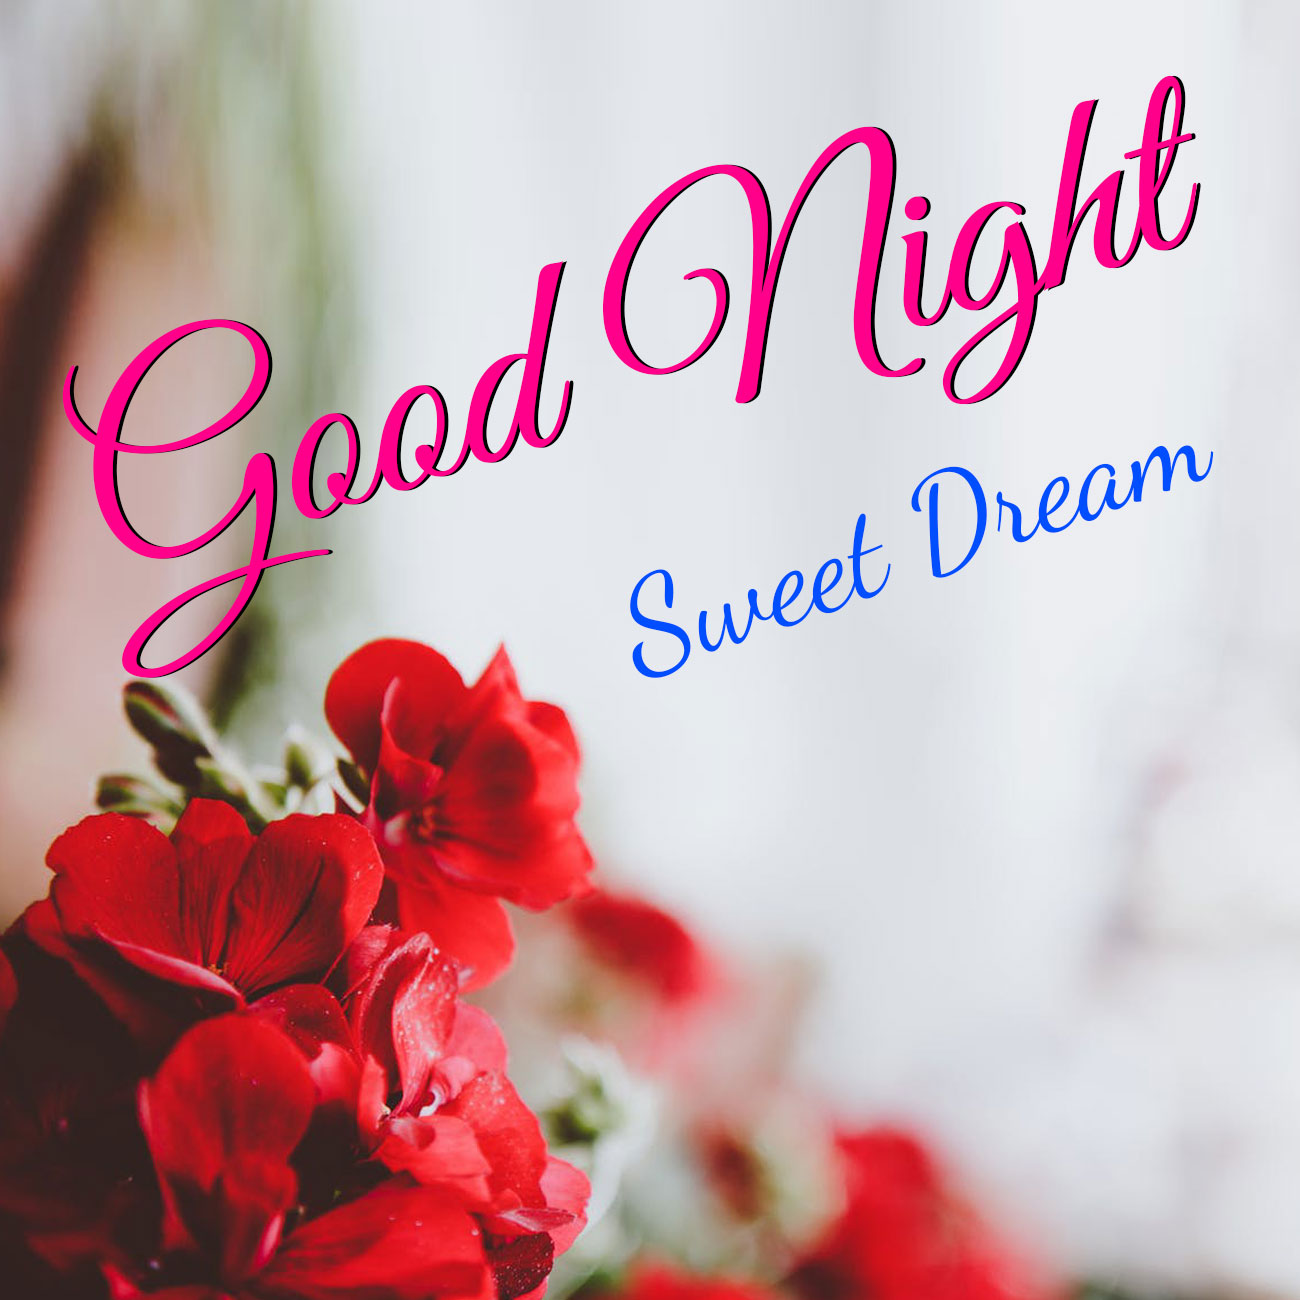 Good Night Image Download - Garden Roses , HD Wallpaper & Backgrounds